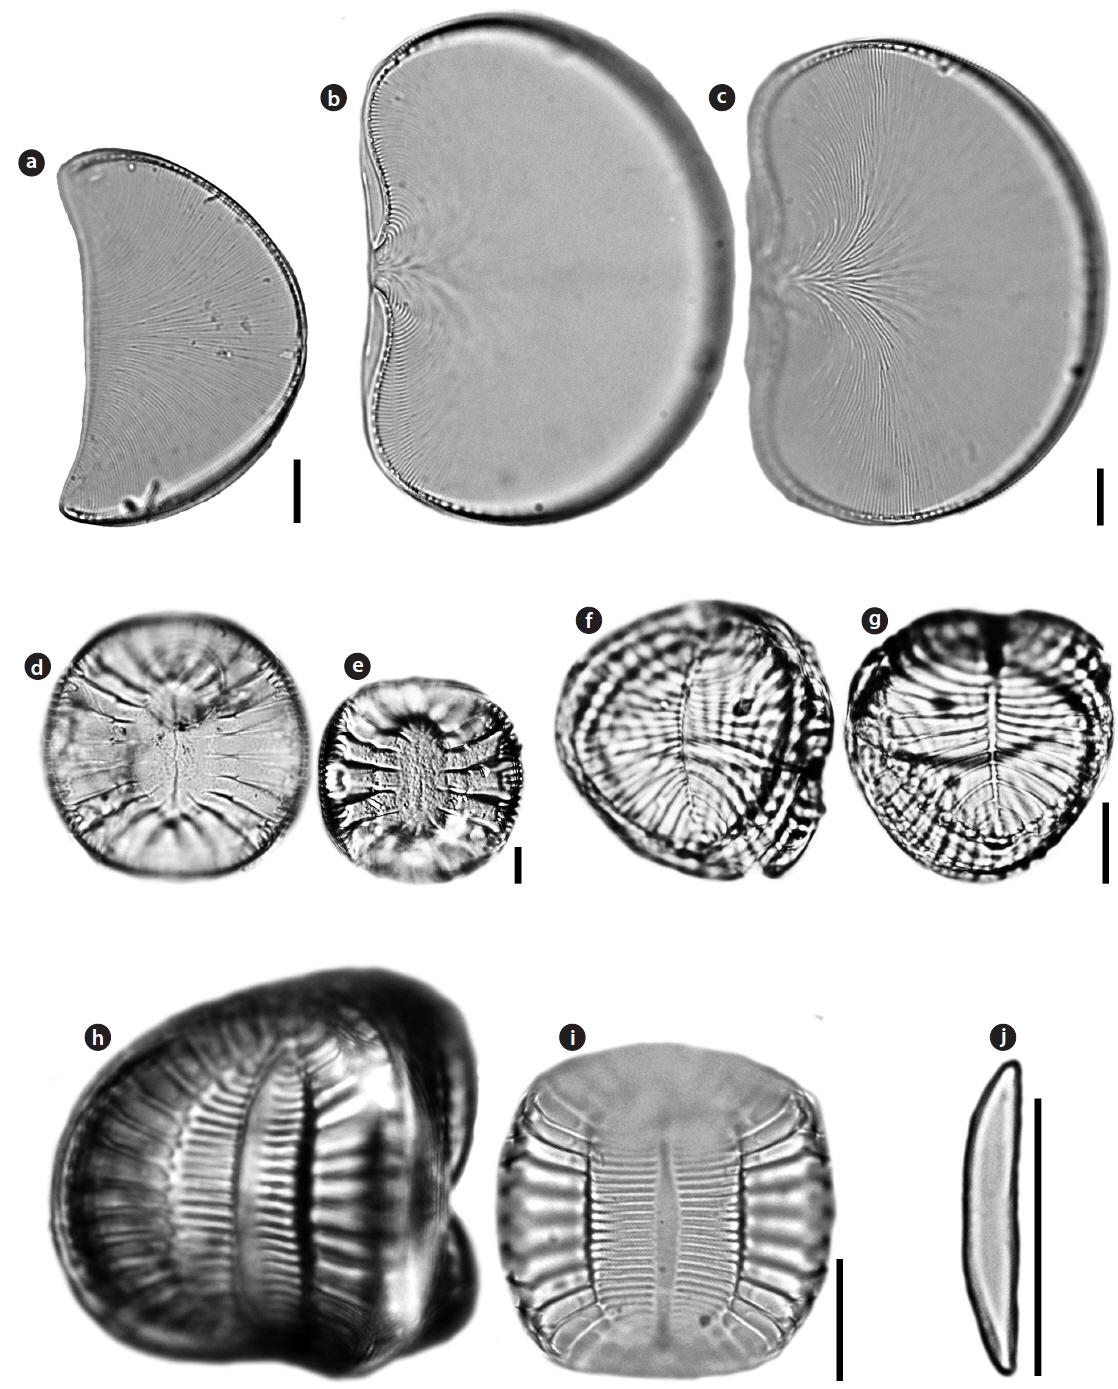 Light microscopy (LM) microphotographs. (a) Auricula complexa, (b, c) Auricula flabelliformis, (d, e) Campylodiscus ambiguus, (f, g) Campylodiscus decorus, (h, i) Campylodiscus samoensis, and (j) Catenula adhaerens. Scale bars, 10 μm.